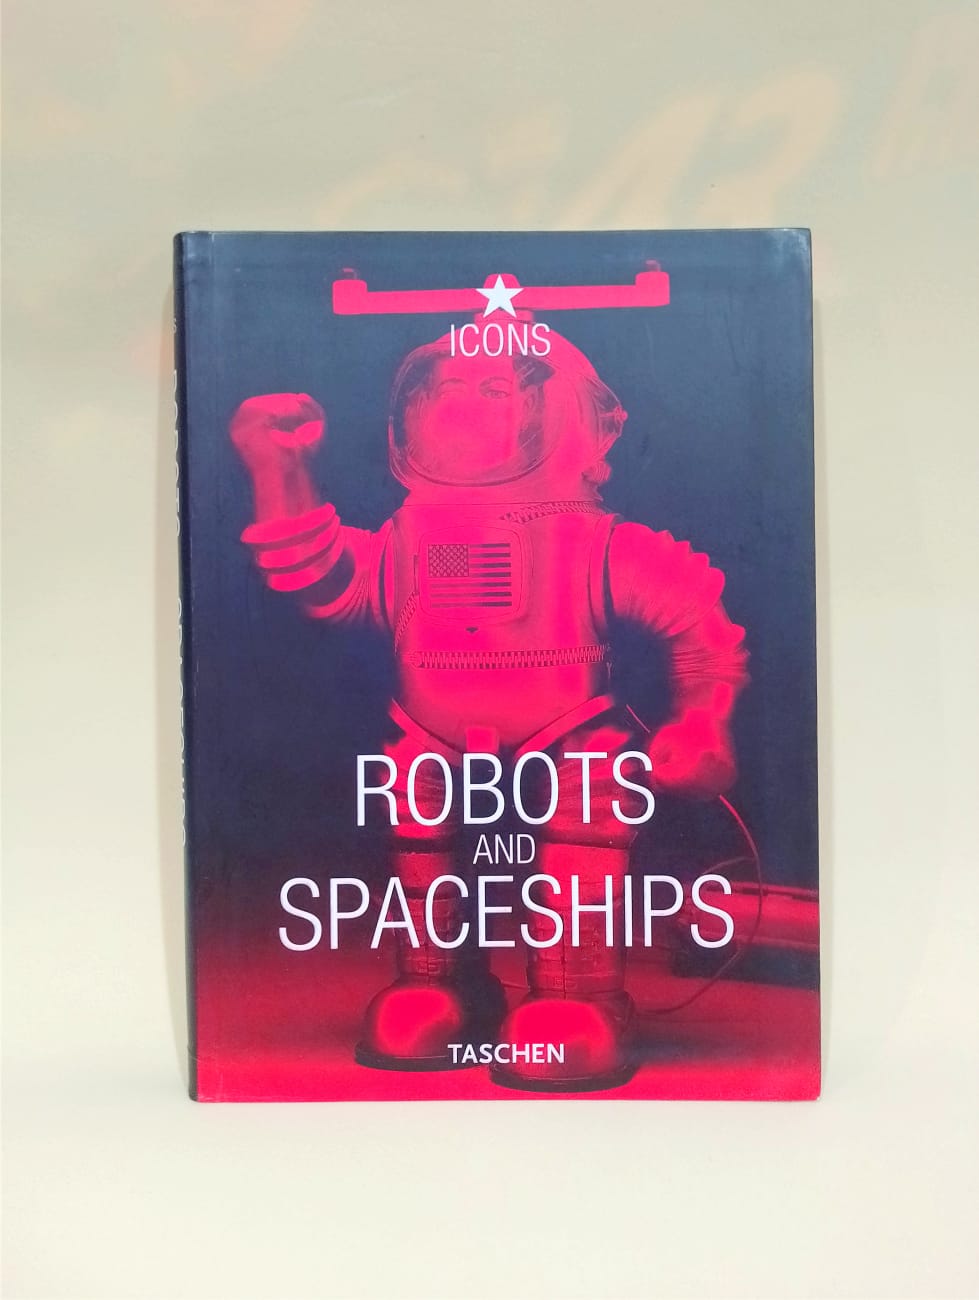 Robots spaceships libro fotos juguetes antiguos